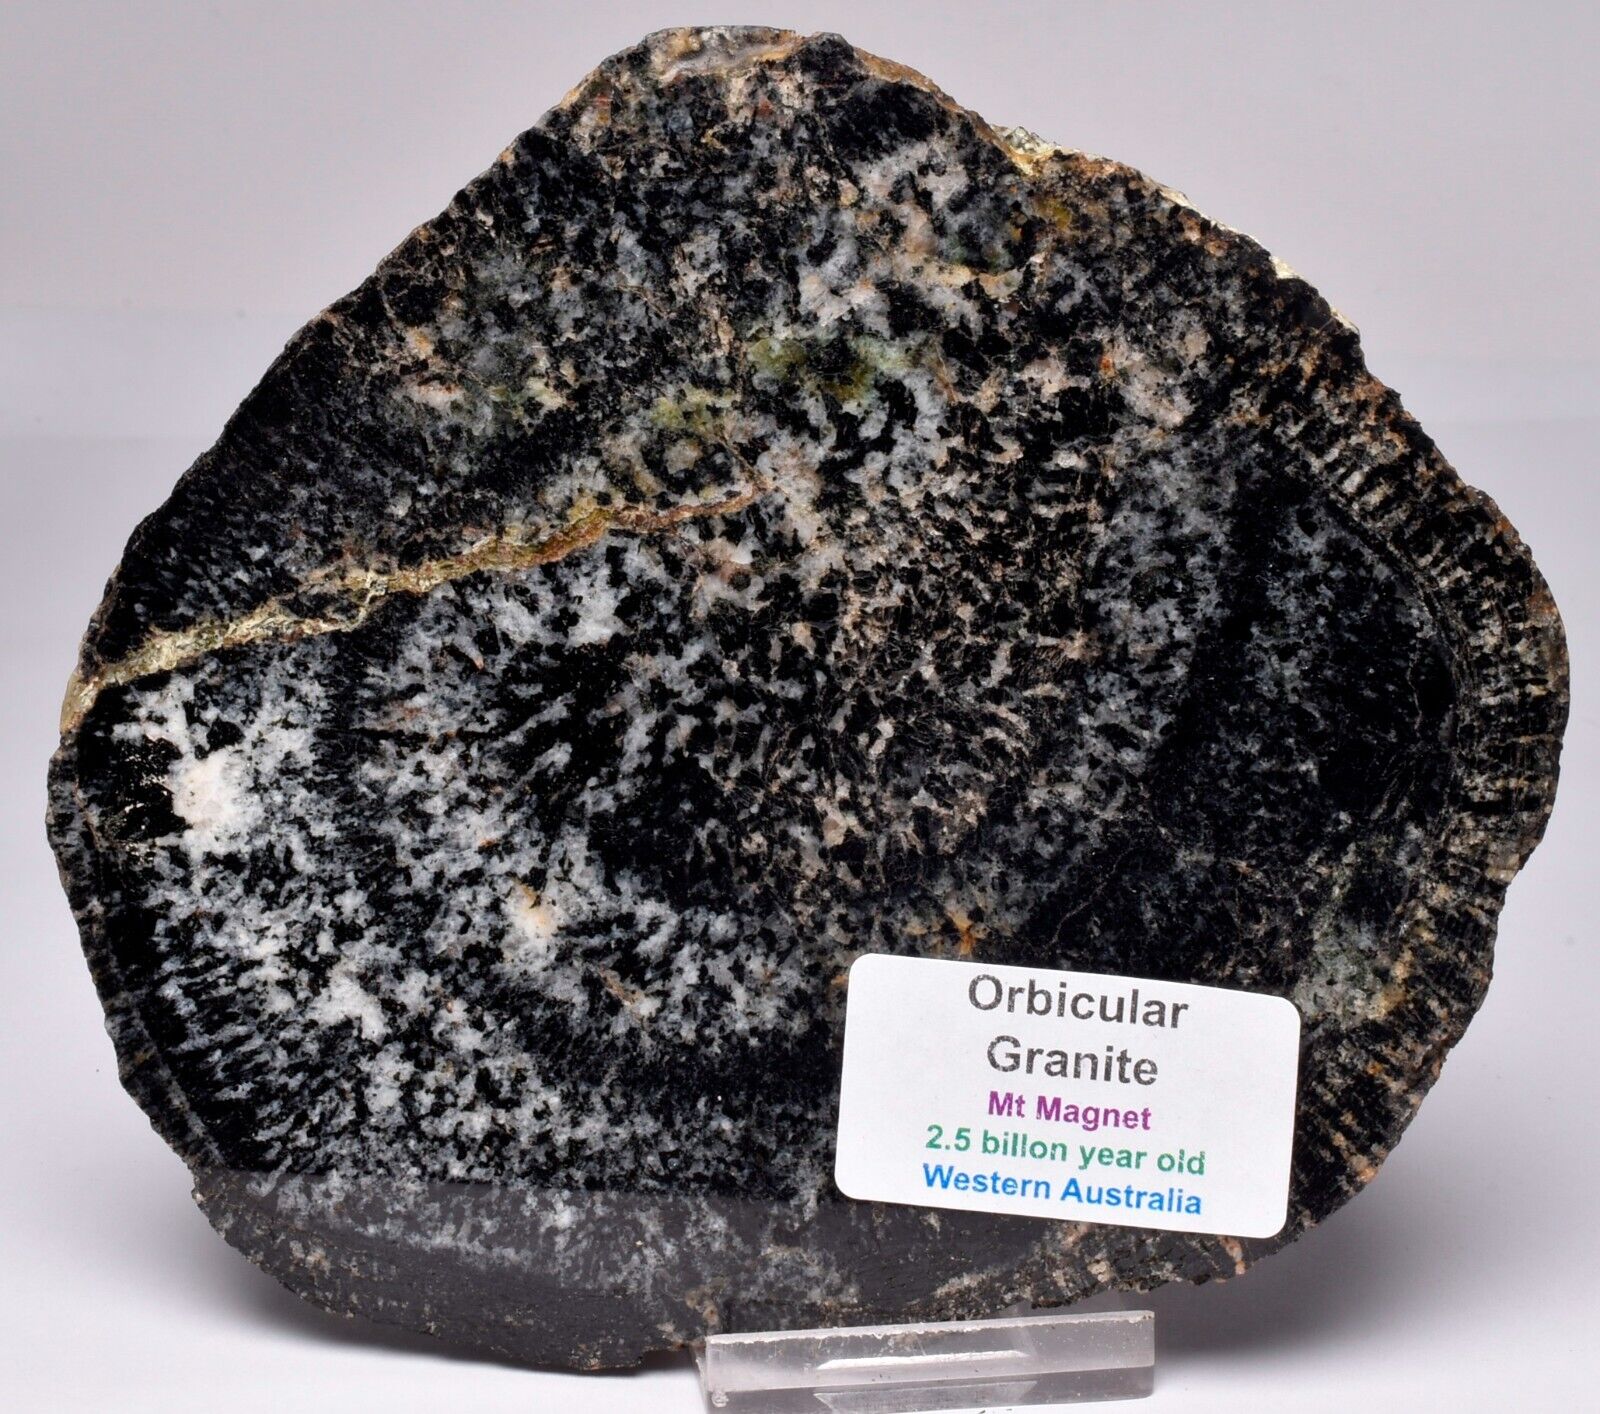 ORBICULAR GRANITE NODULE, Mt Magnet, 2.5 billion year old, Australia S806